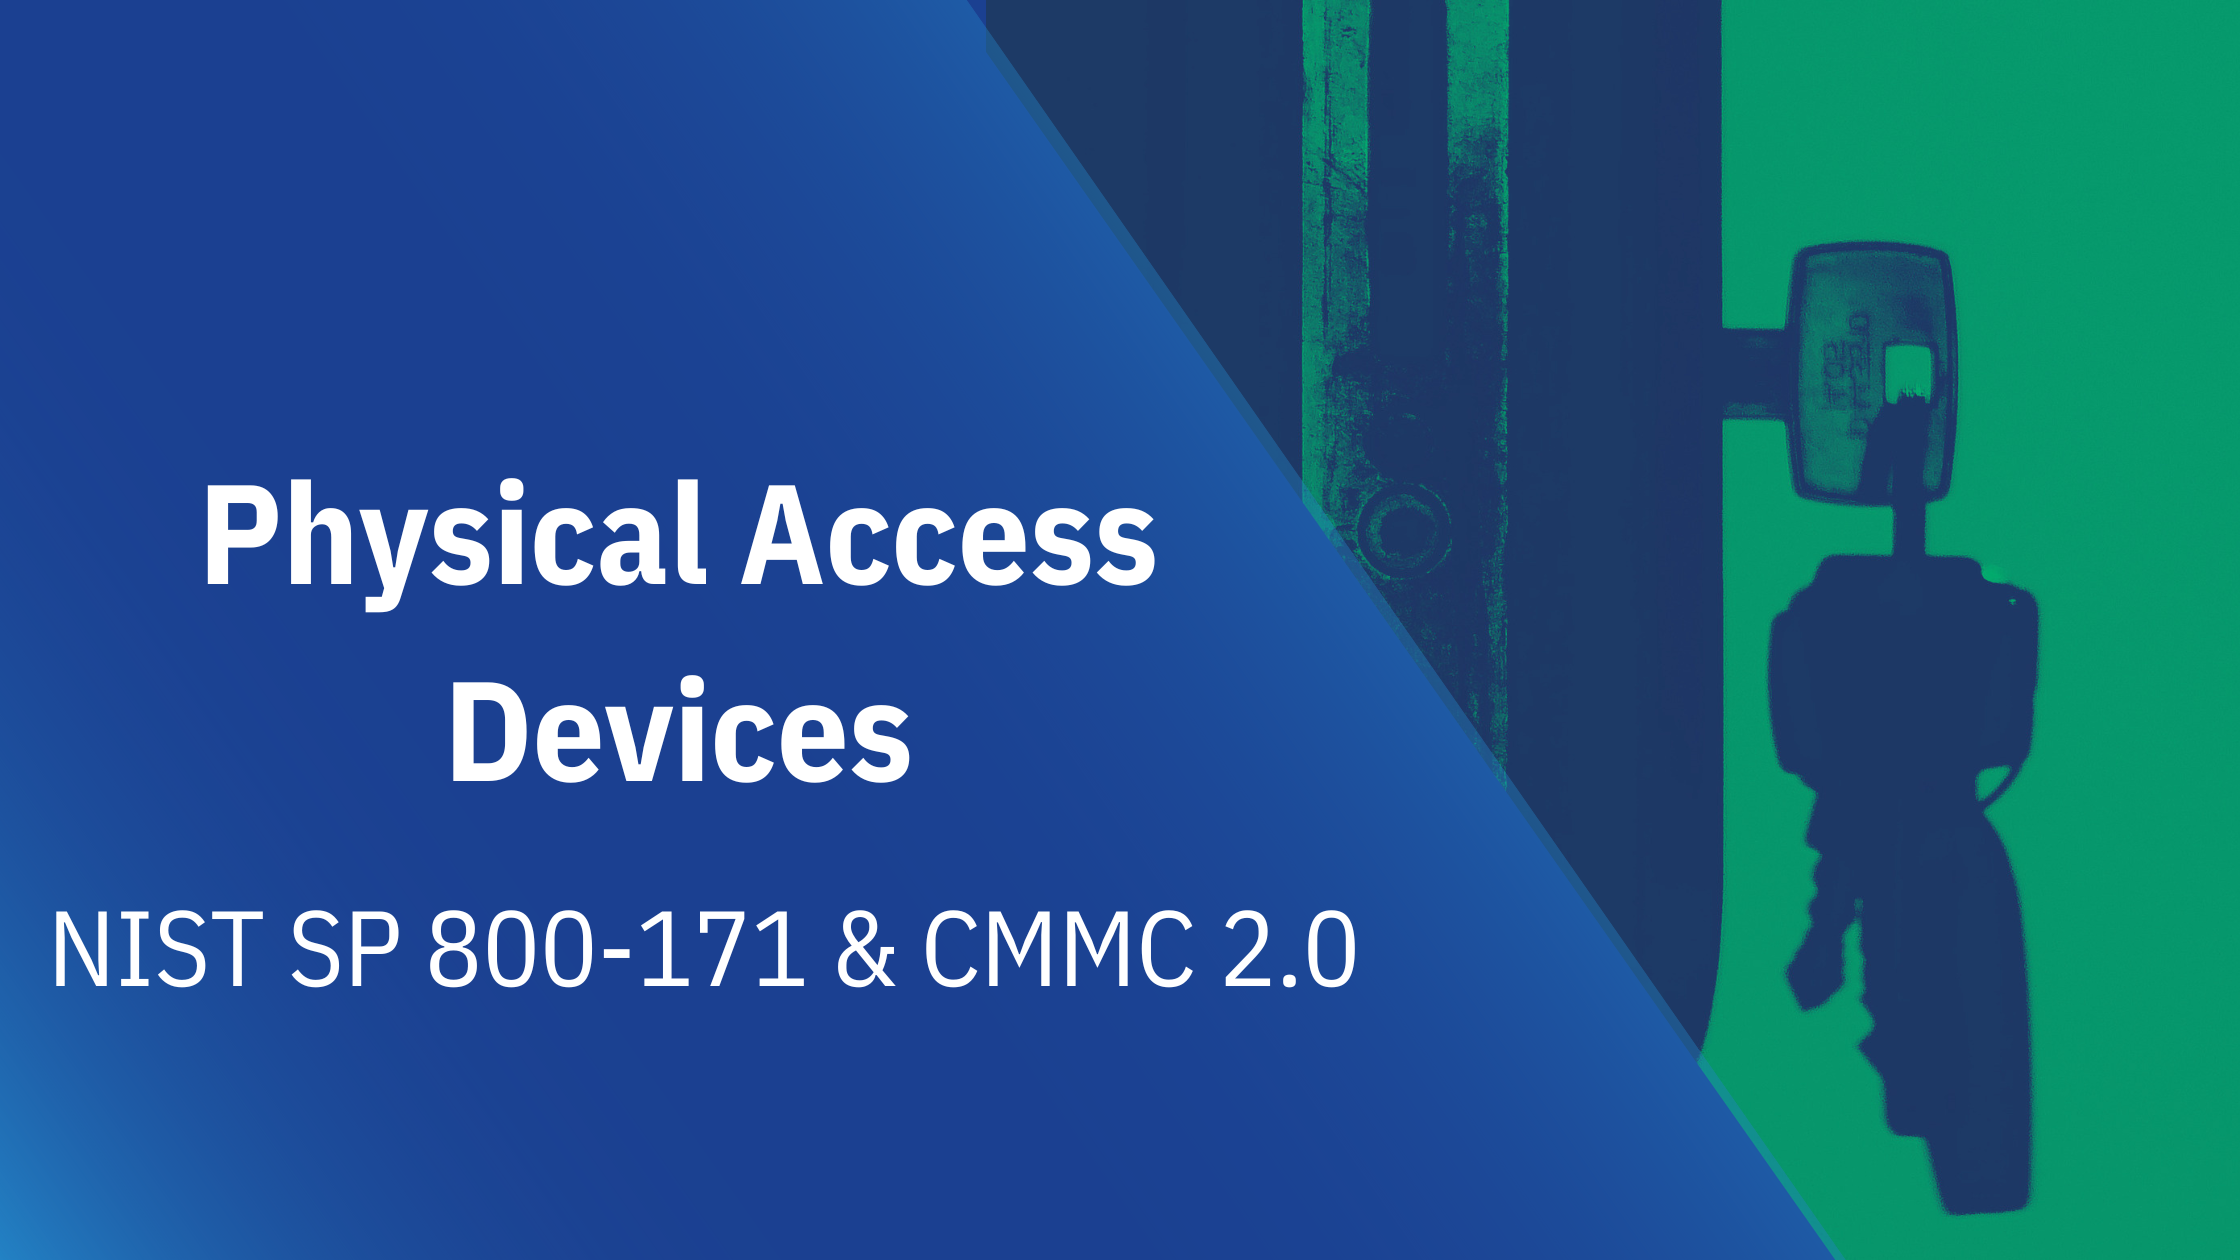 CMMC, NIST SP 800-171, Physical Access Device